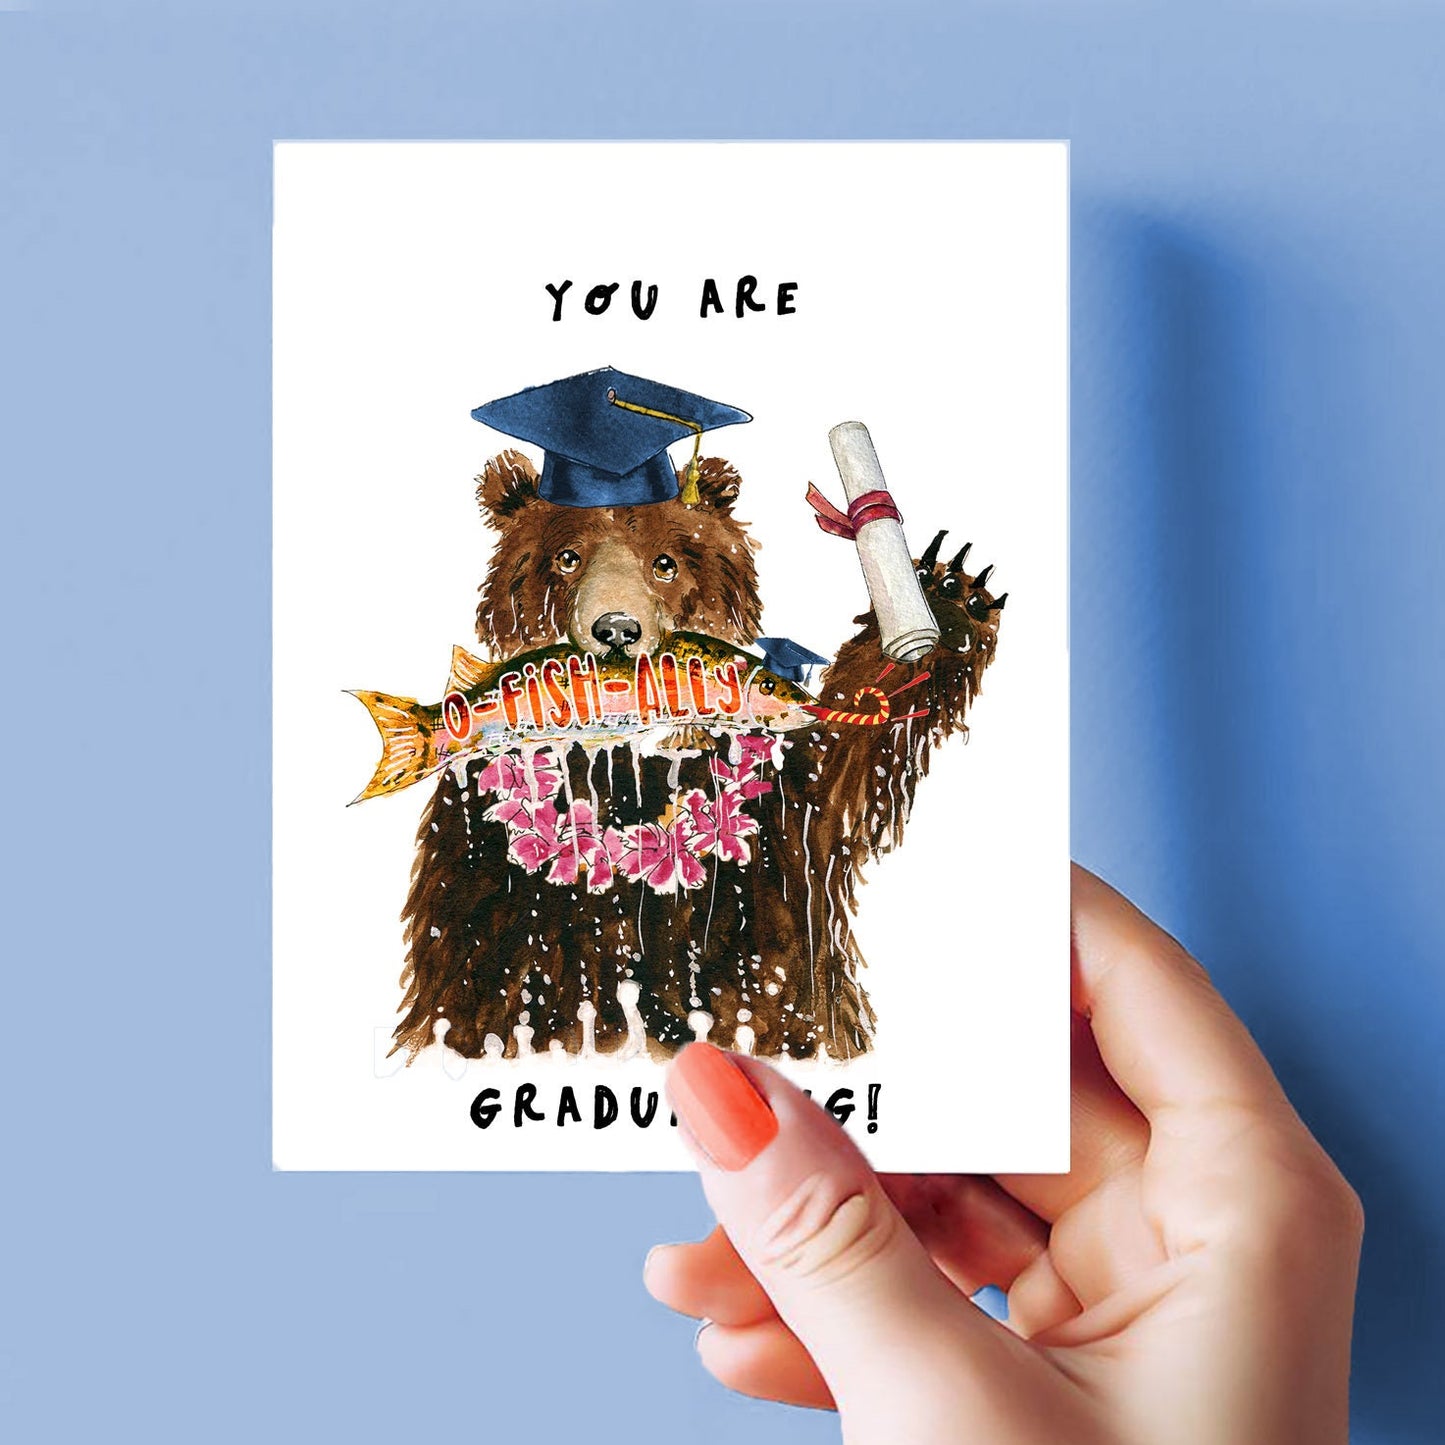 Bear Fishing Funny Graduation Card 2024 -Bear Graduation Gift For Son - Liyana Studio Handmade Greeting Cards